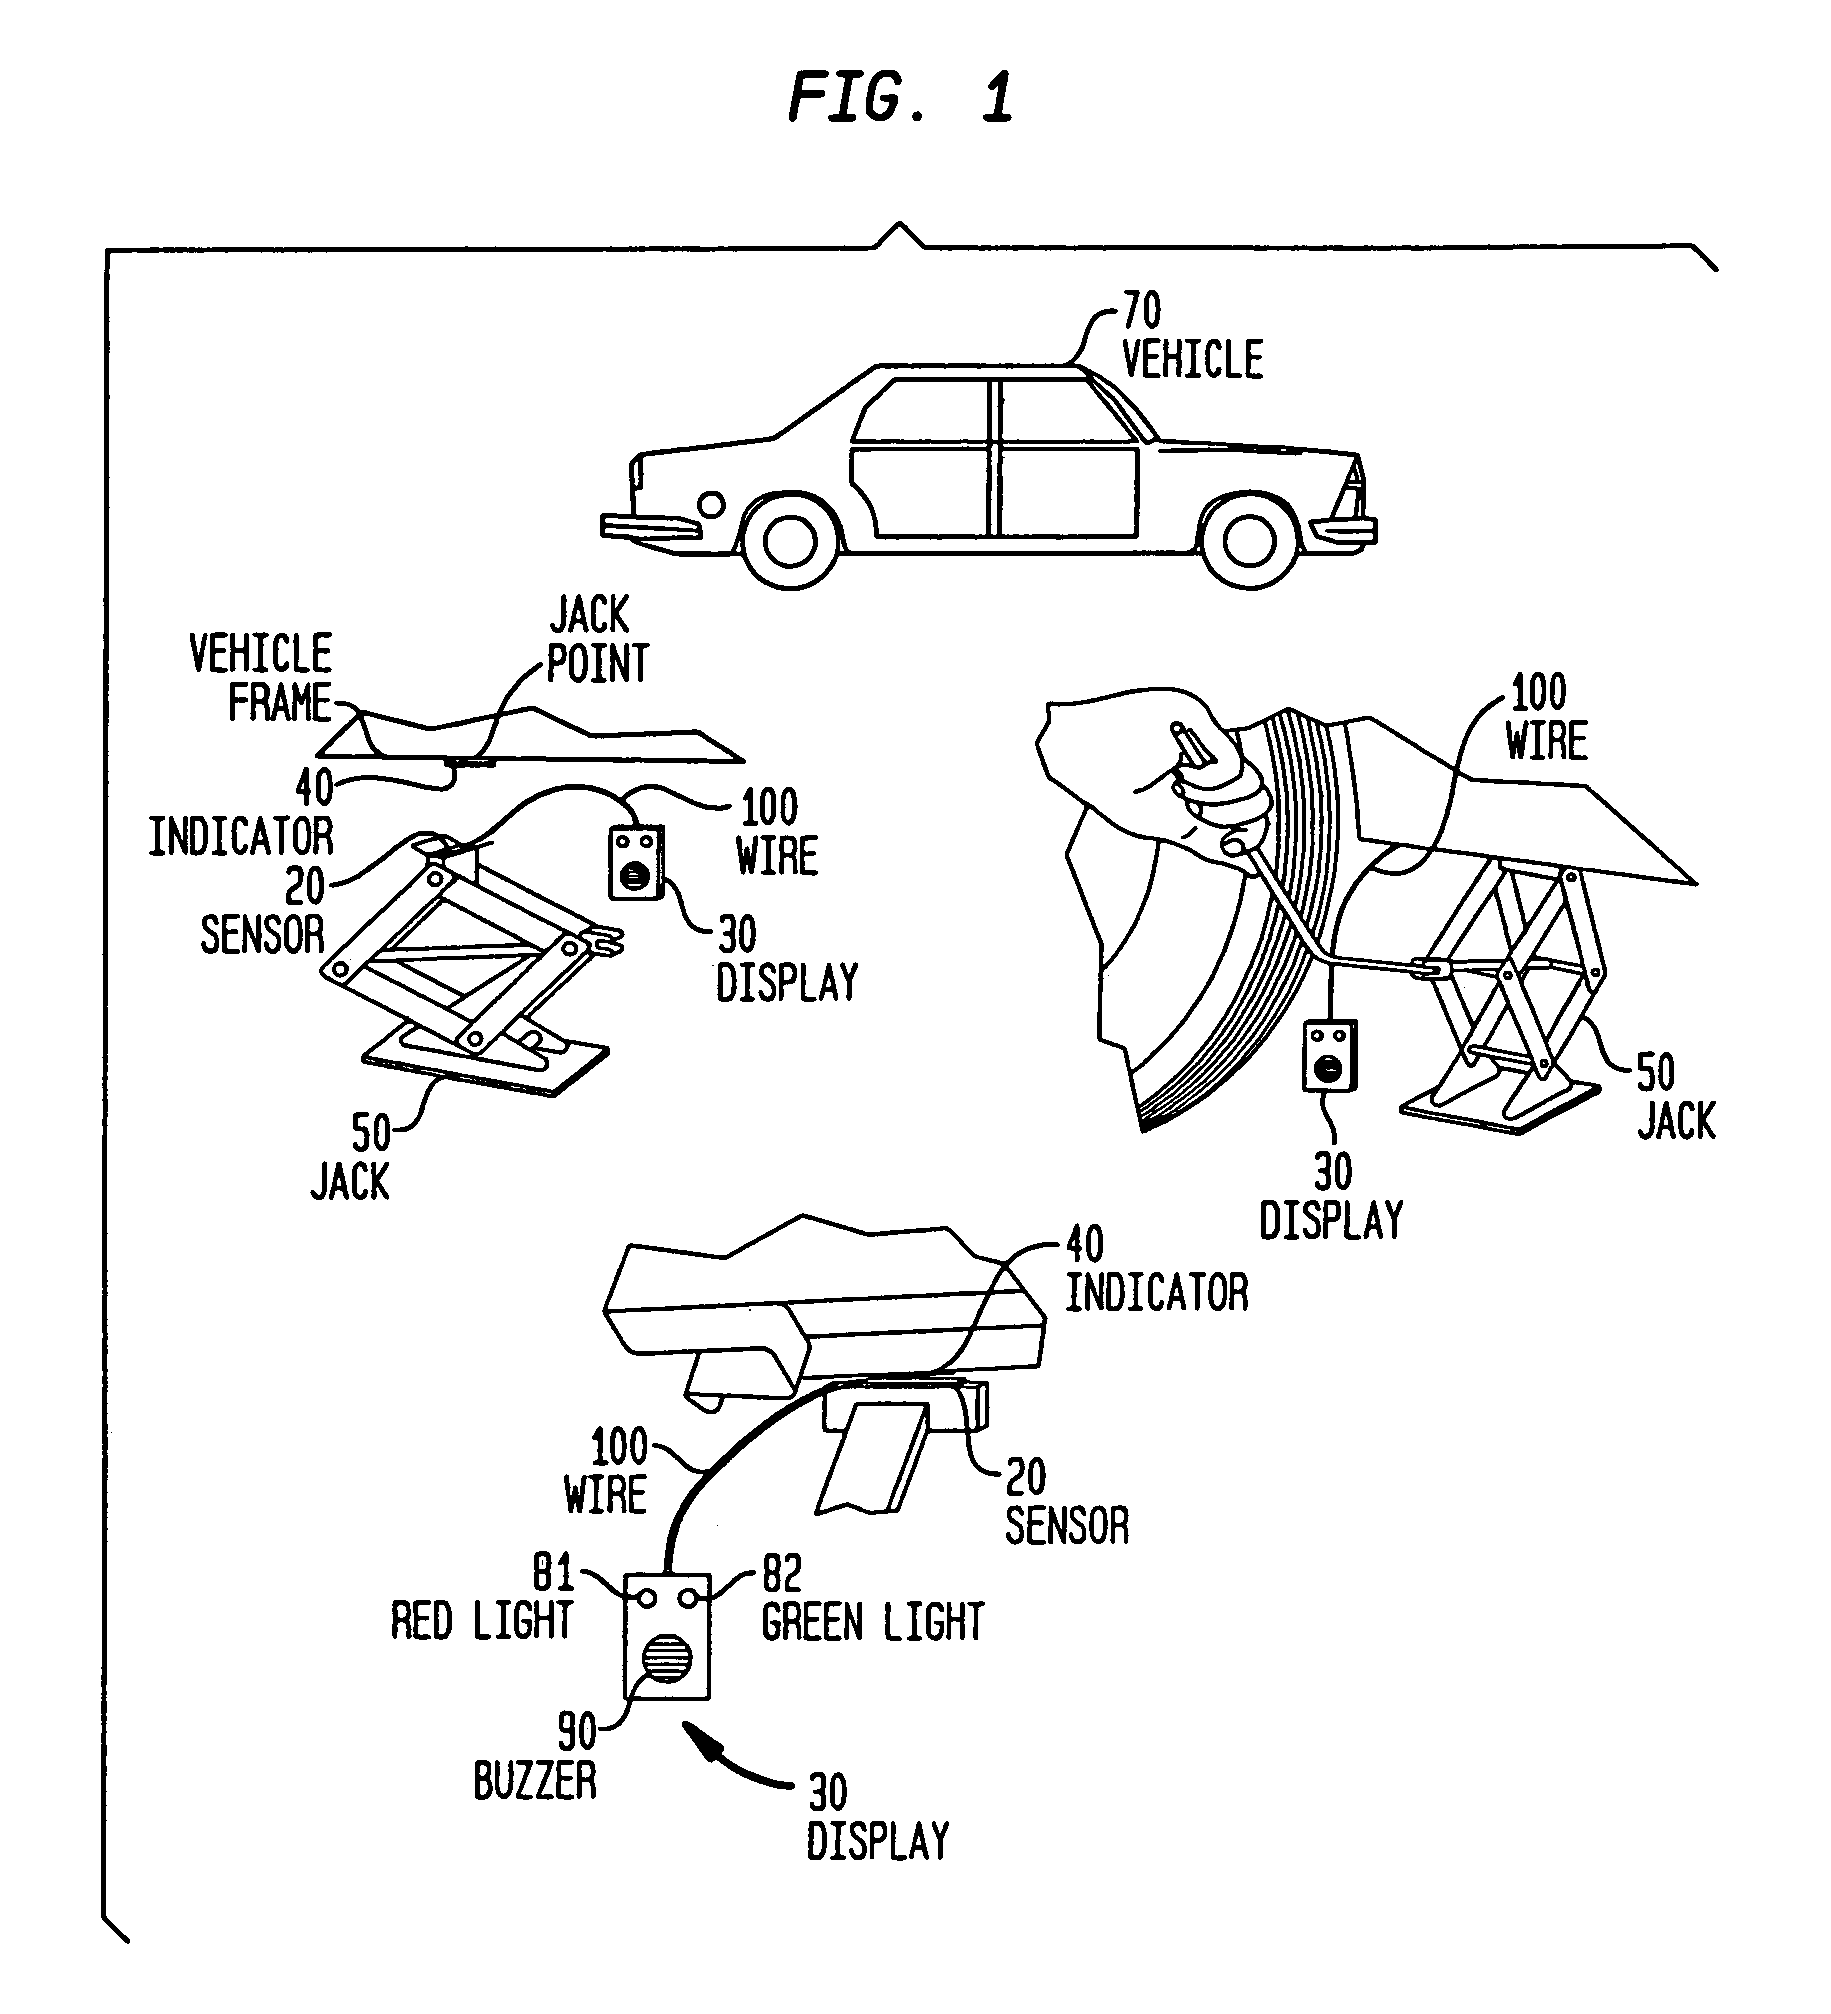 Vehicle jack positioning device and method